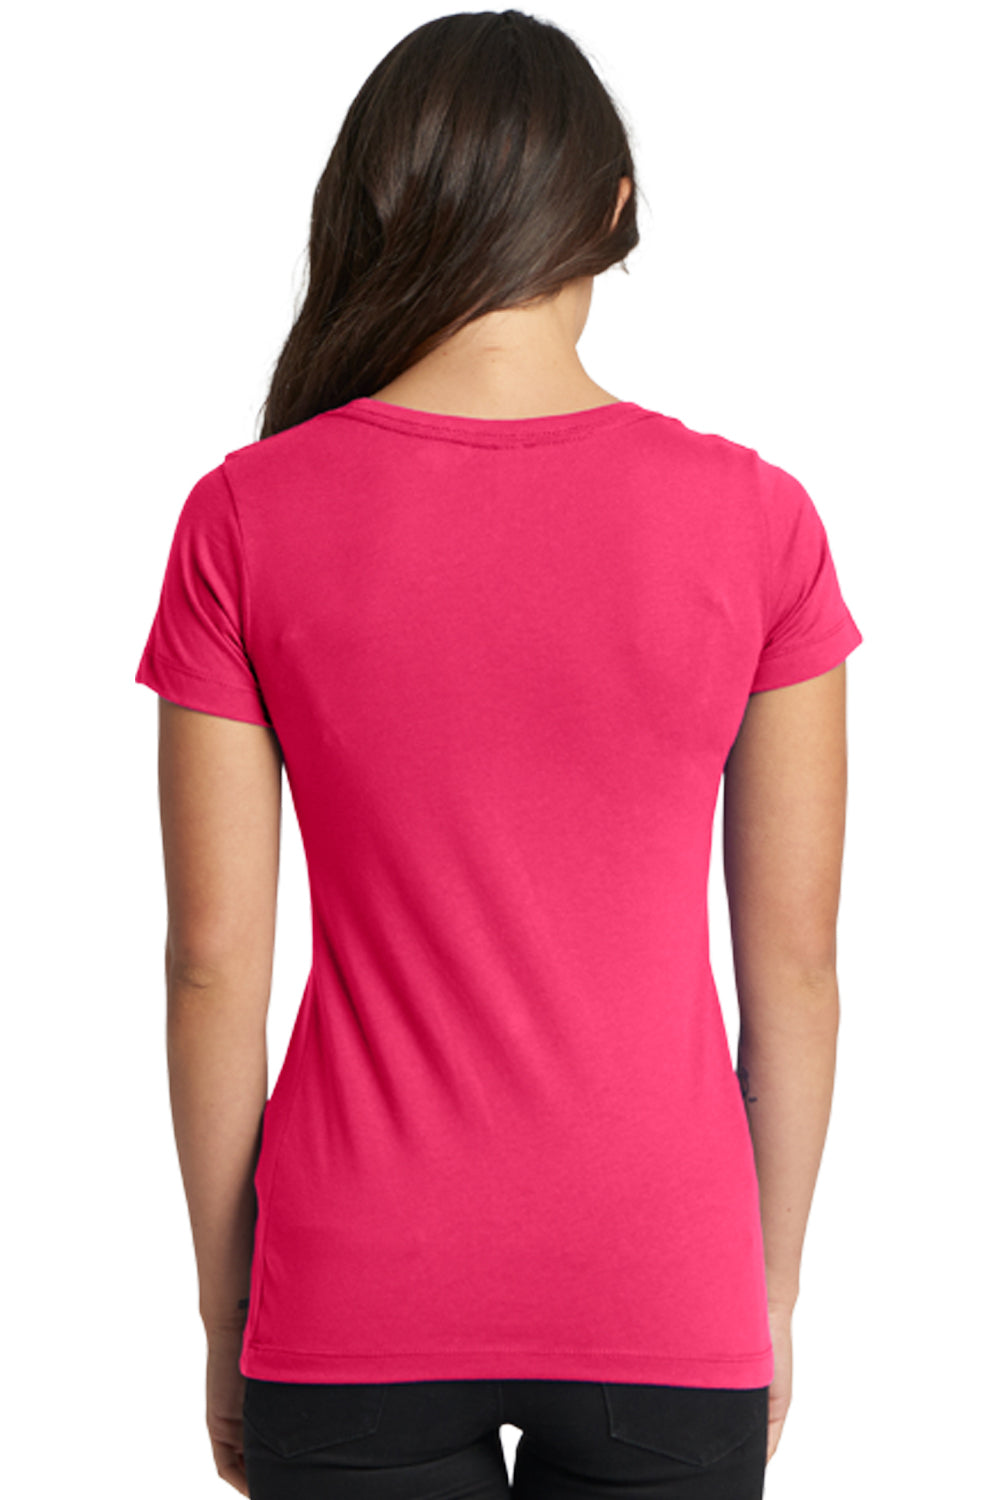 Next Level N1510 Womens Ideal Jersey Short Sleeve Crewneck T-Shirt Raspberry Pink Back